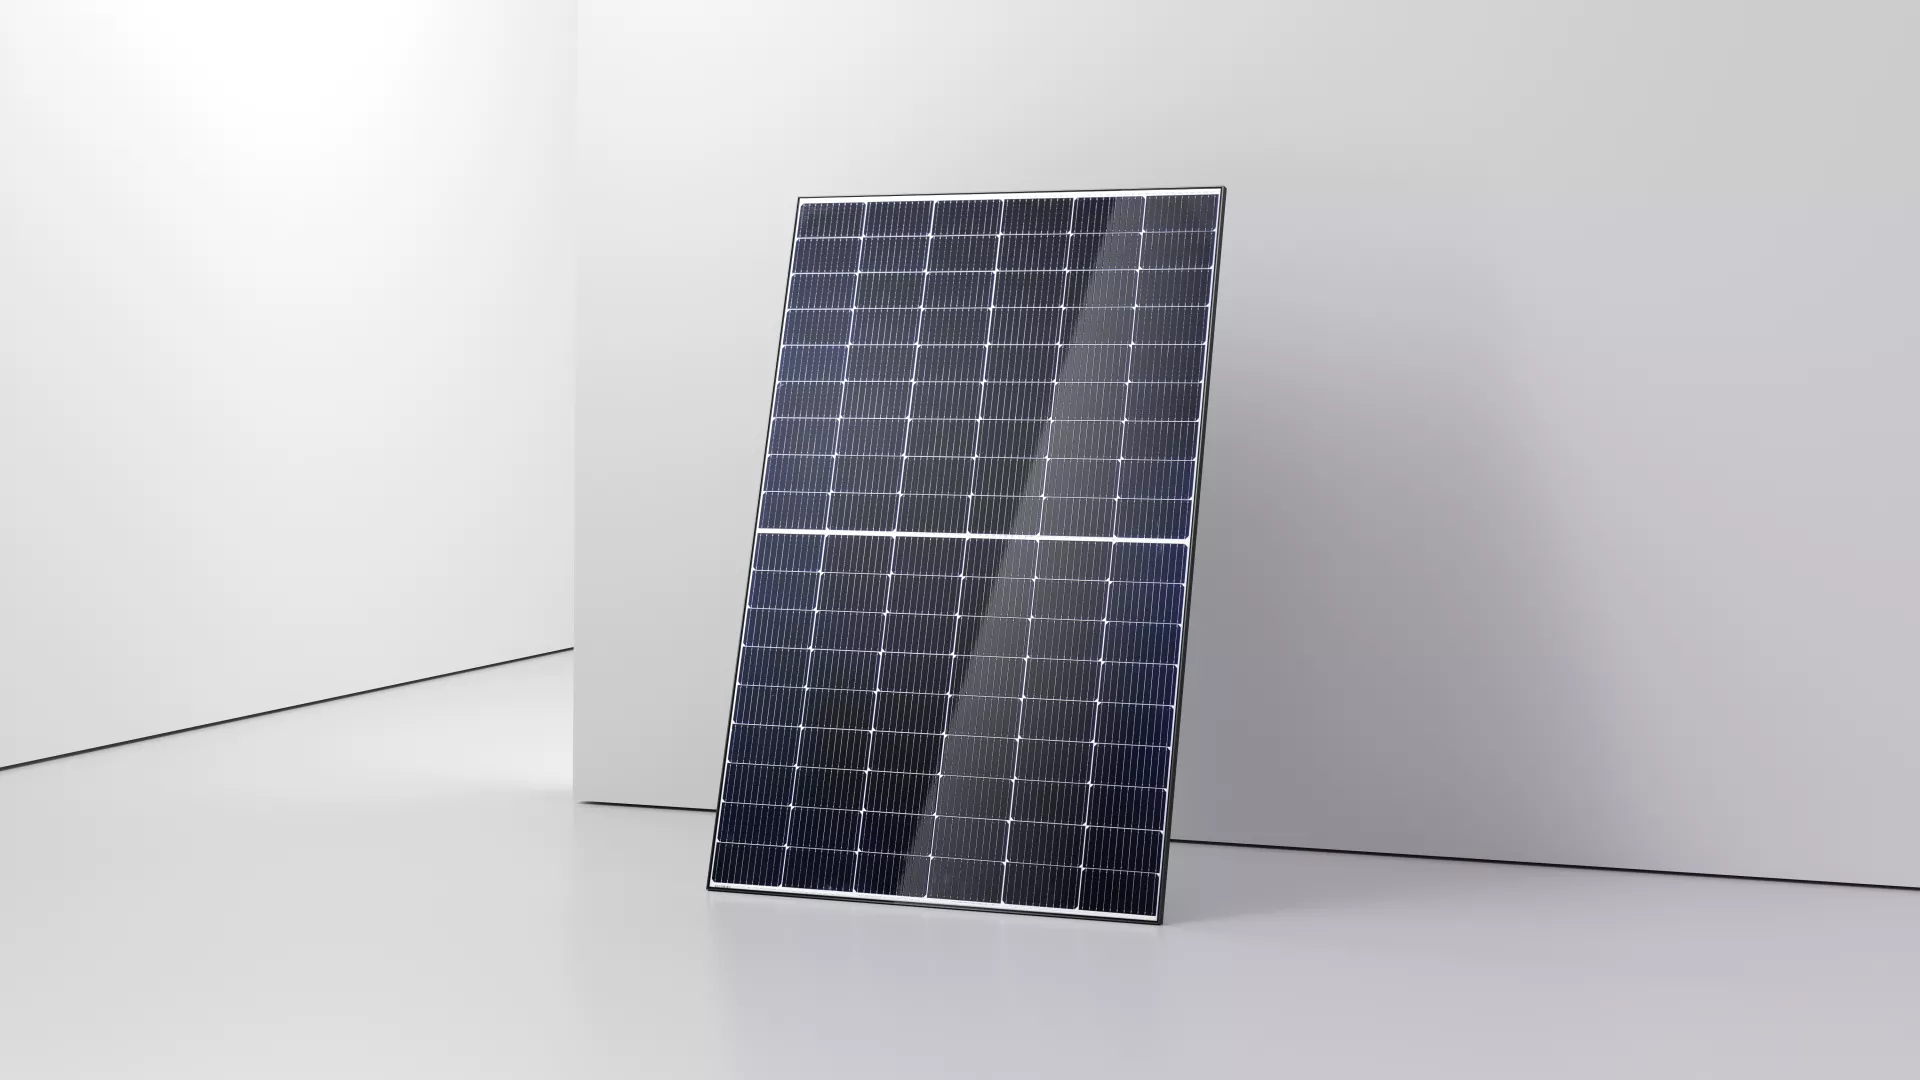 SENEC.Solar Solarmodul 405 W hochkant